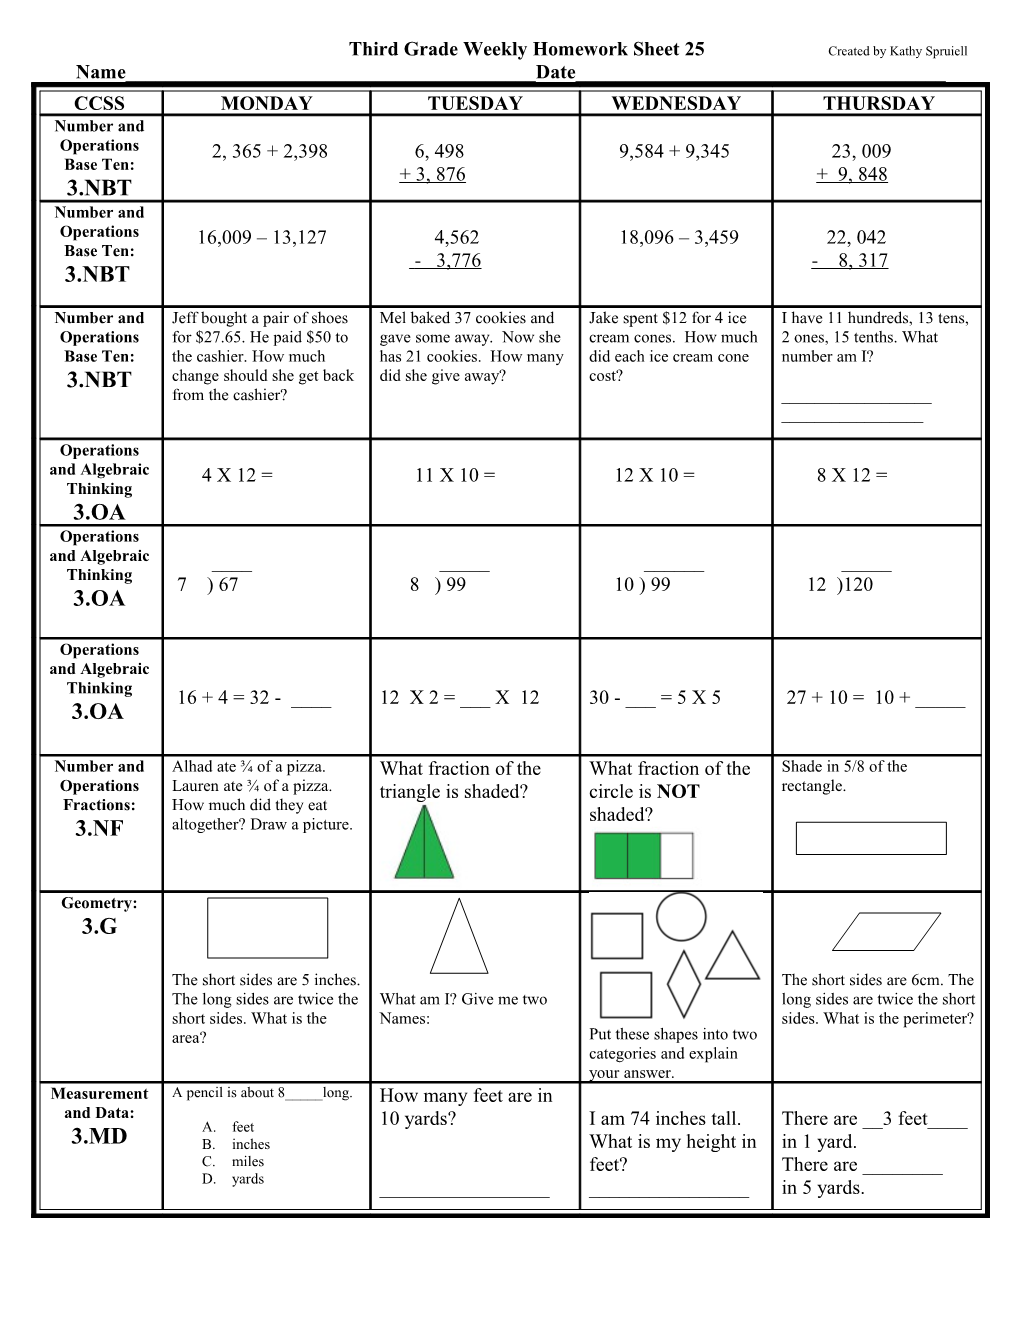 Weekly Homework Sheet s13